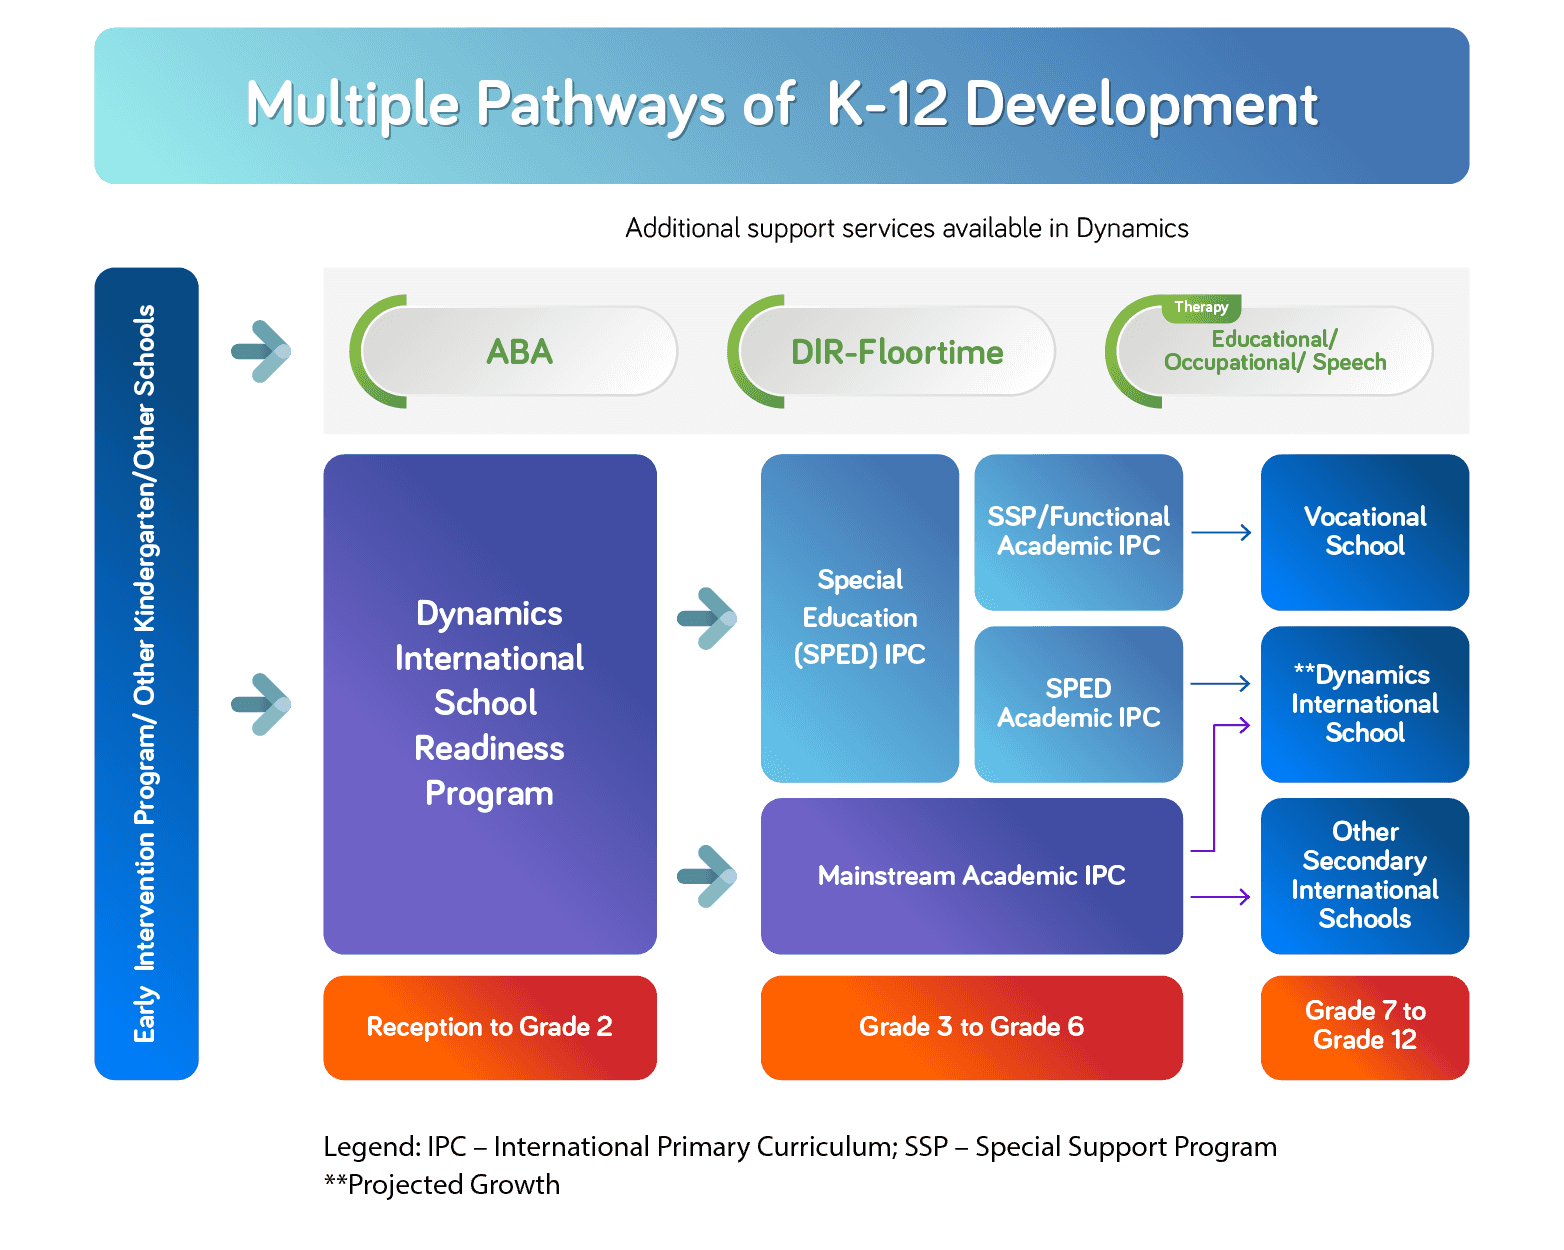 Development Pathways (Reception to Grade 12)